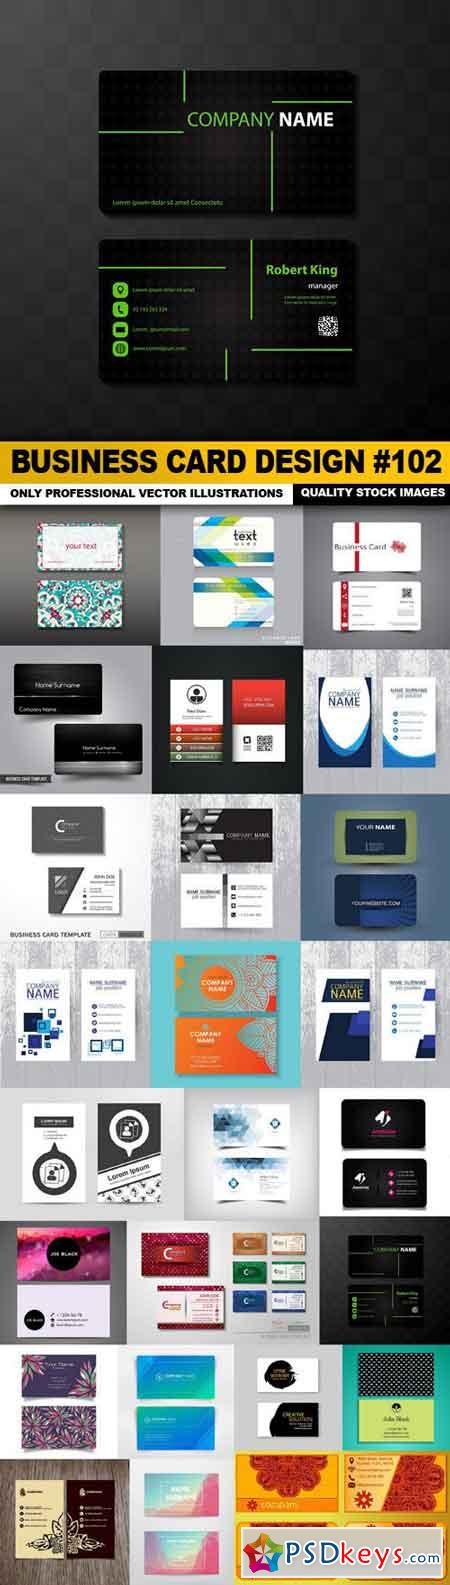 Business Card Design #102 - 25 Vector